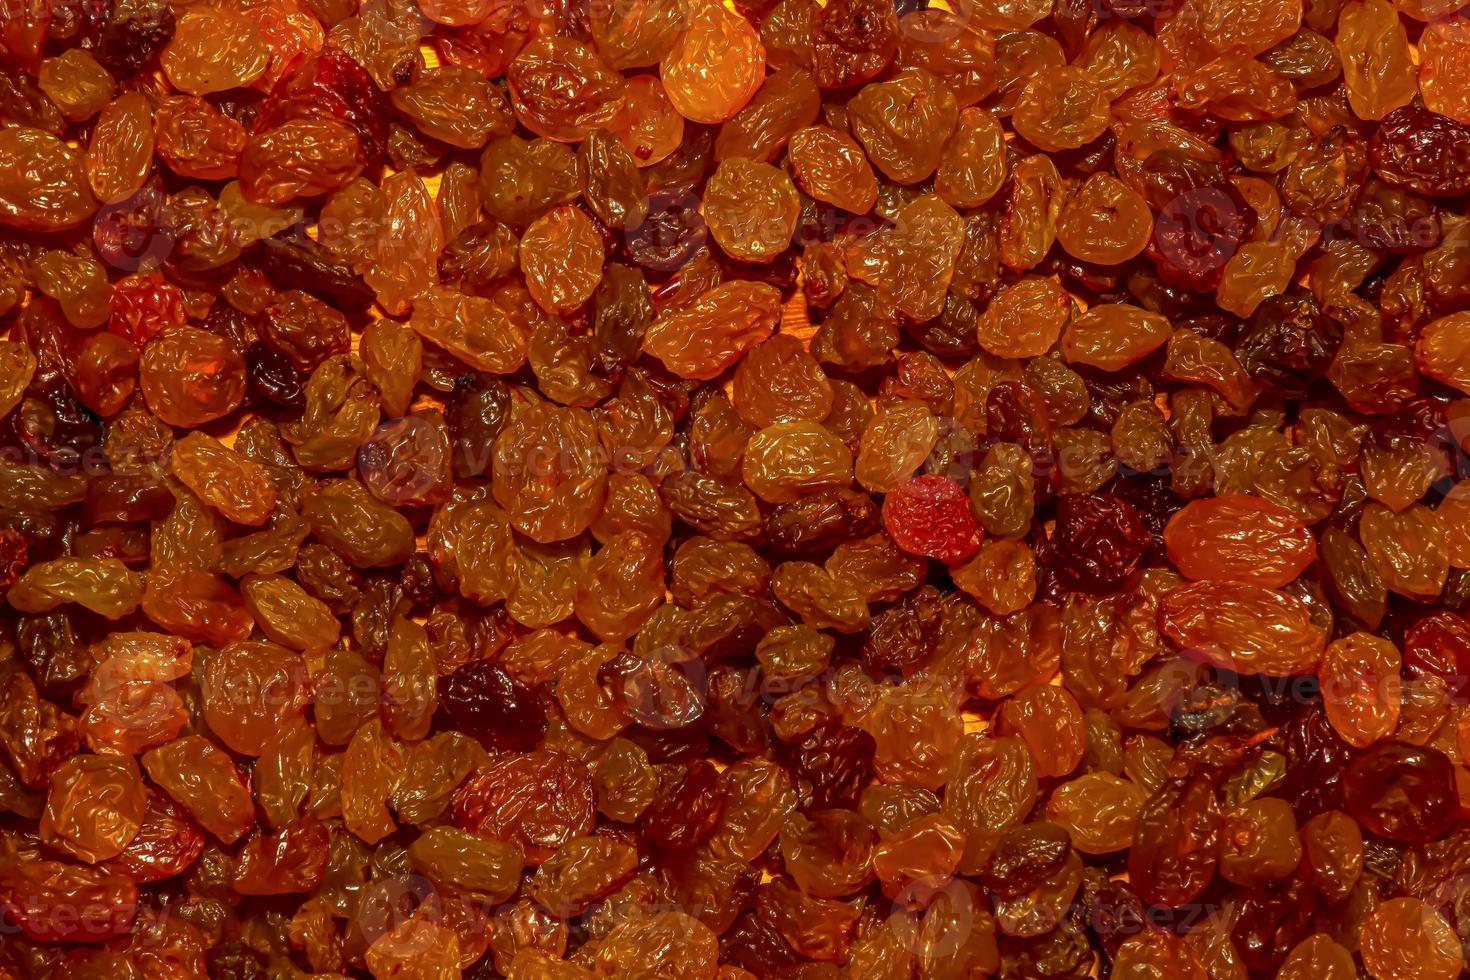 Texture of yellow and orange raisins from pink grapes. Raisins background photo